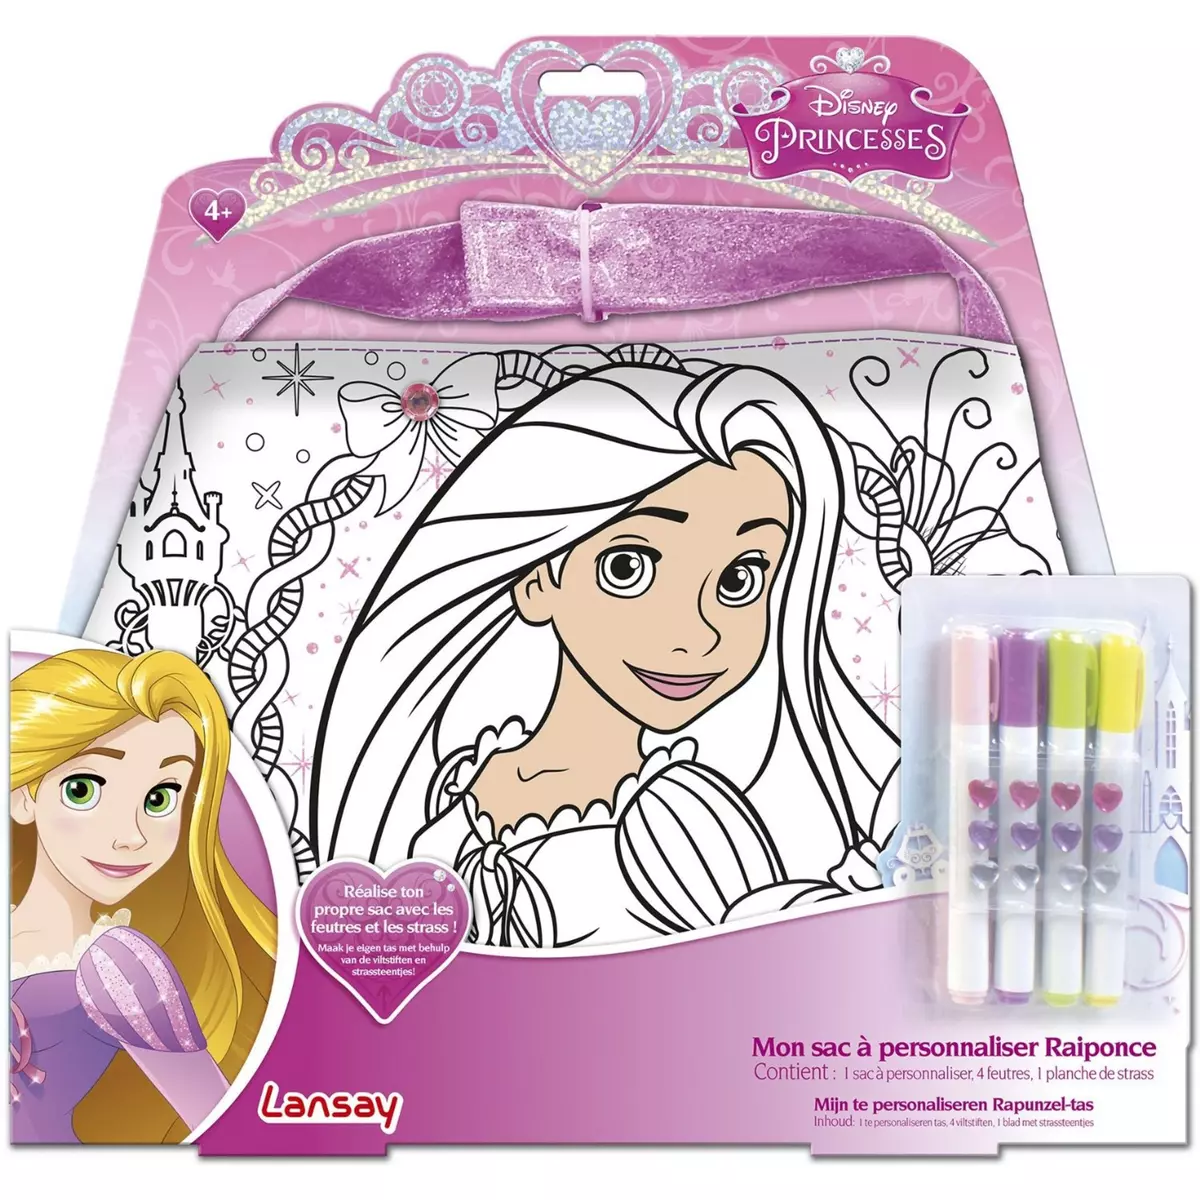 LANSAY Mon sac à personnaliser Raiponce - Disney princesses